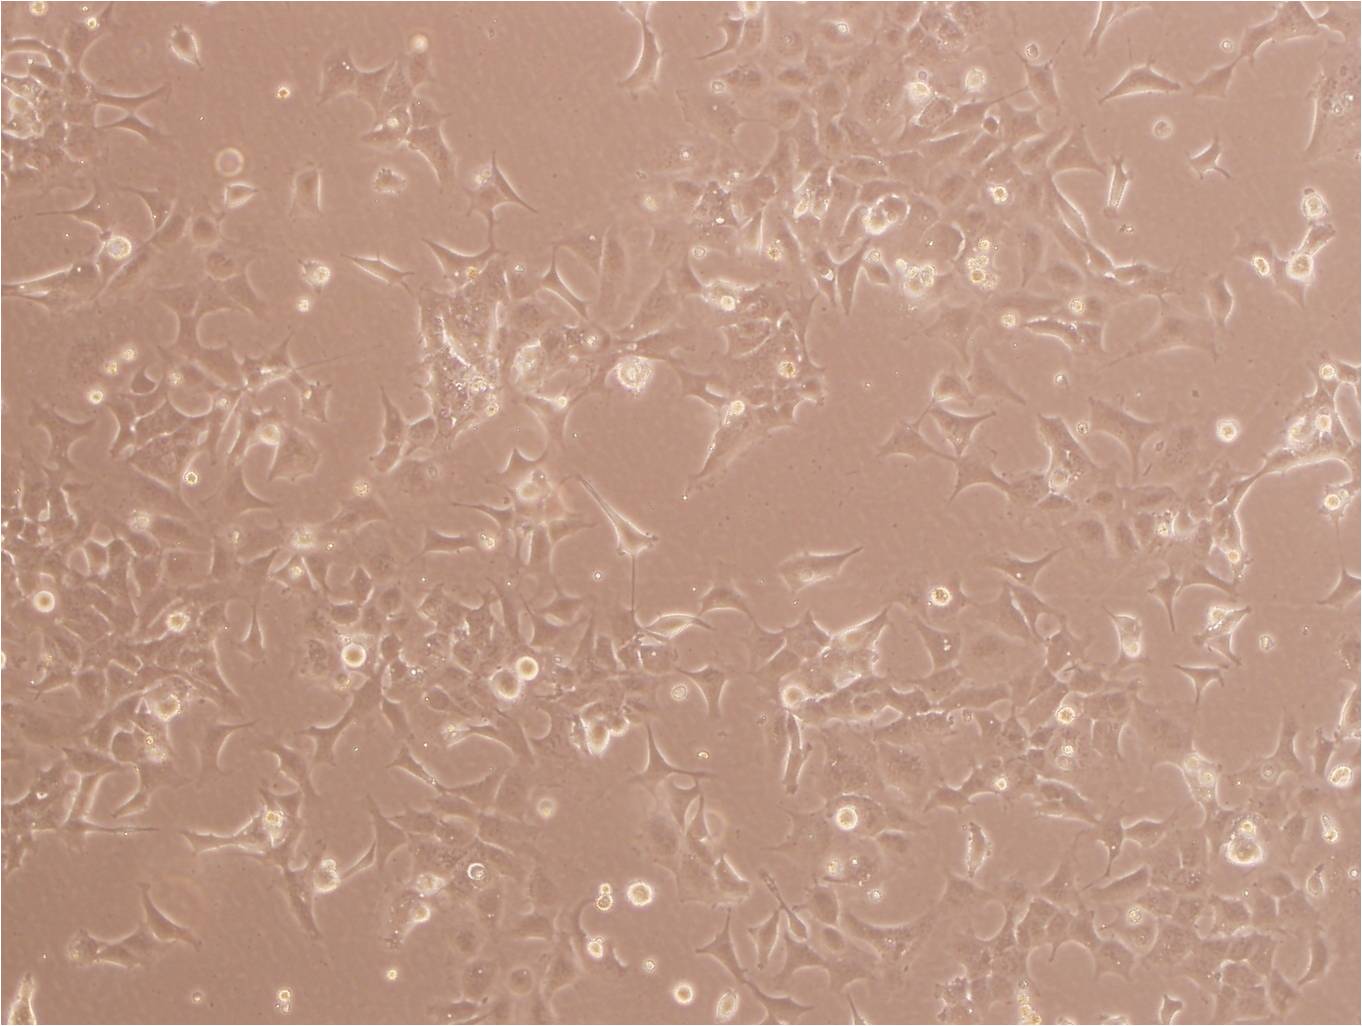 U-87MG ATCC人脑星形胶质母细胞瘤复苏细胞(附STR鉴定报告),U-87MG ATCC